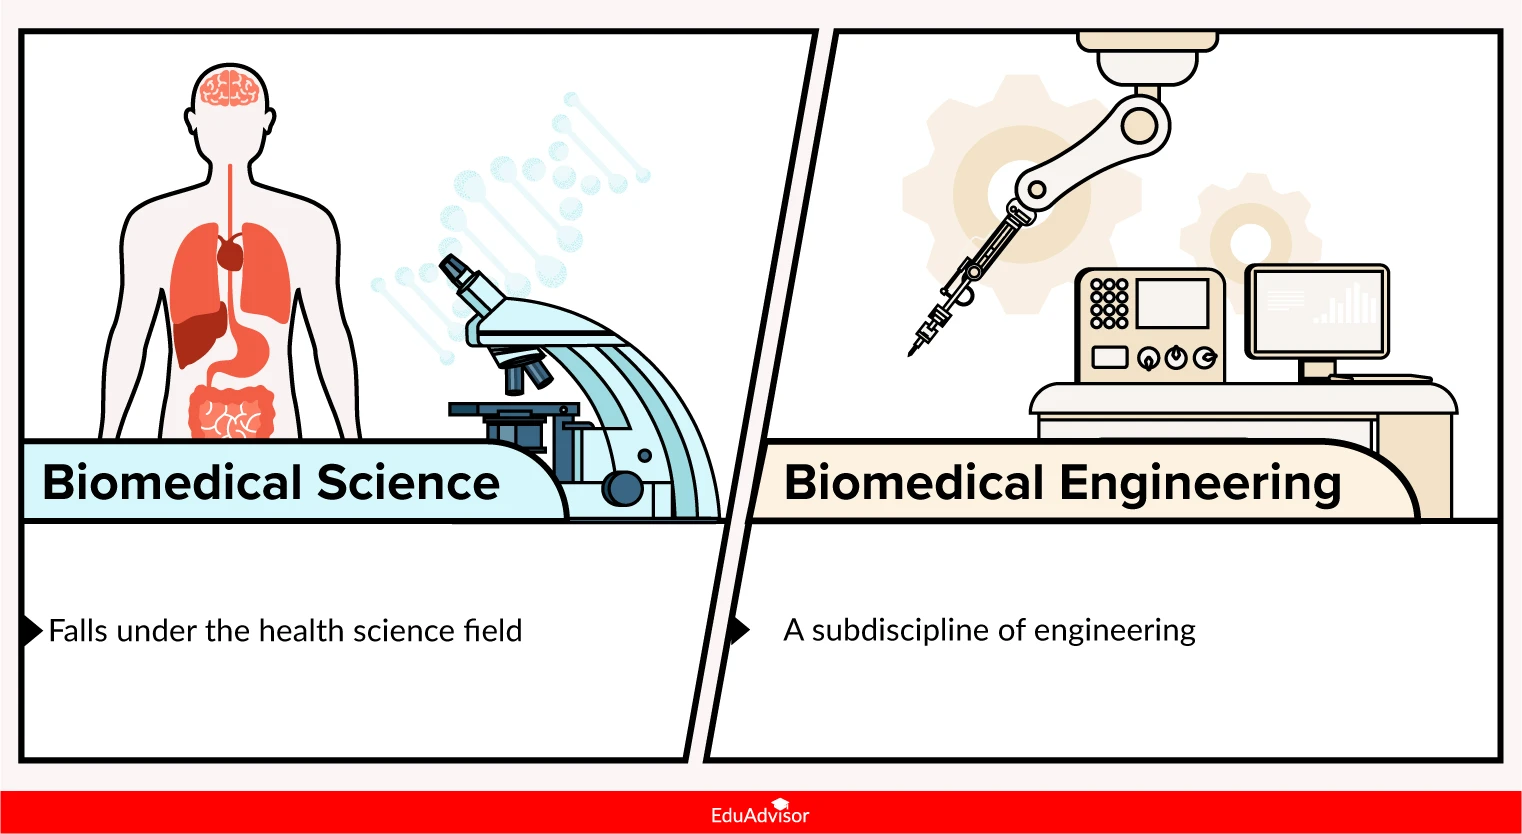 biomed-science-vs-biomed-engineering-field-of-study